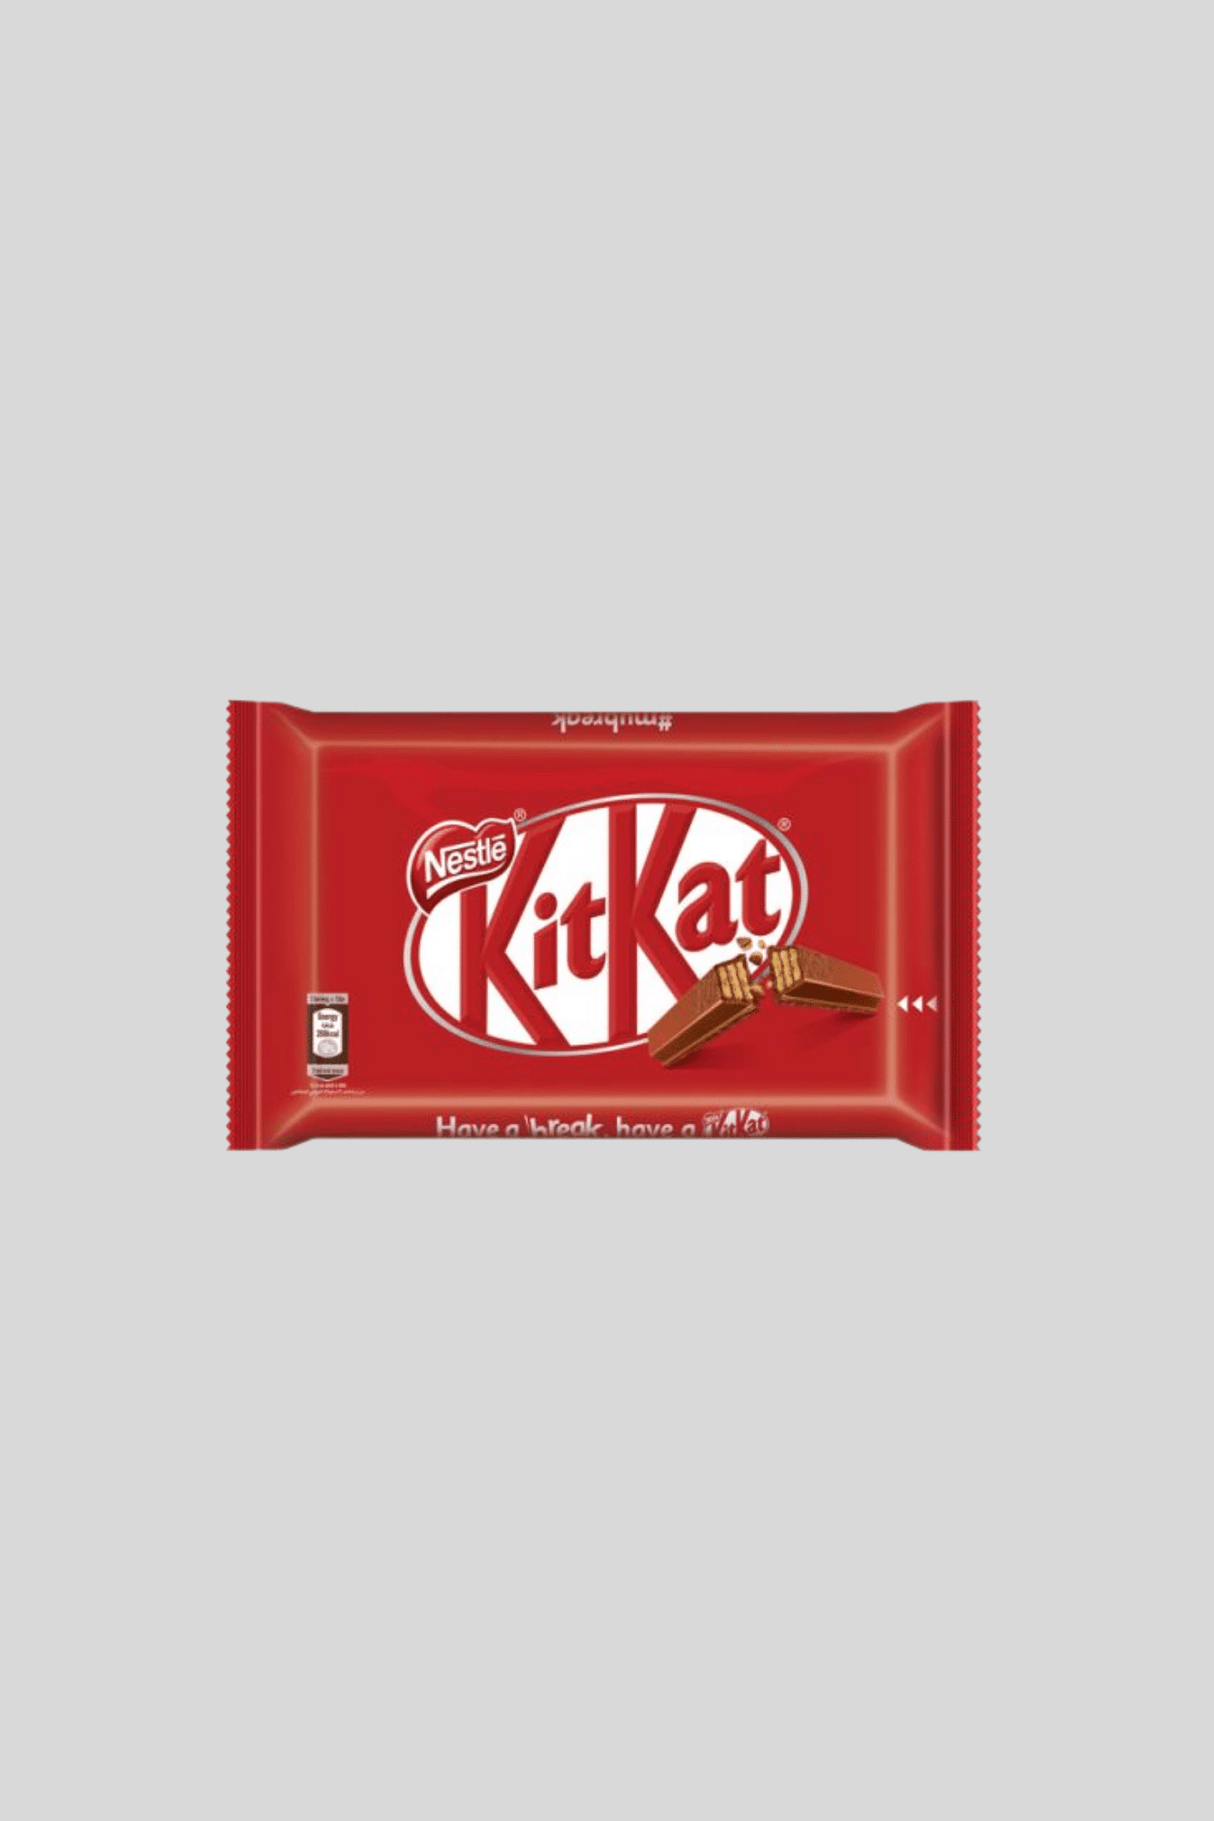 kit kat chocolate 4 fingure 41.5g